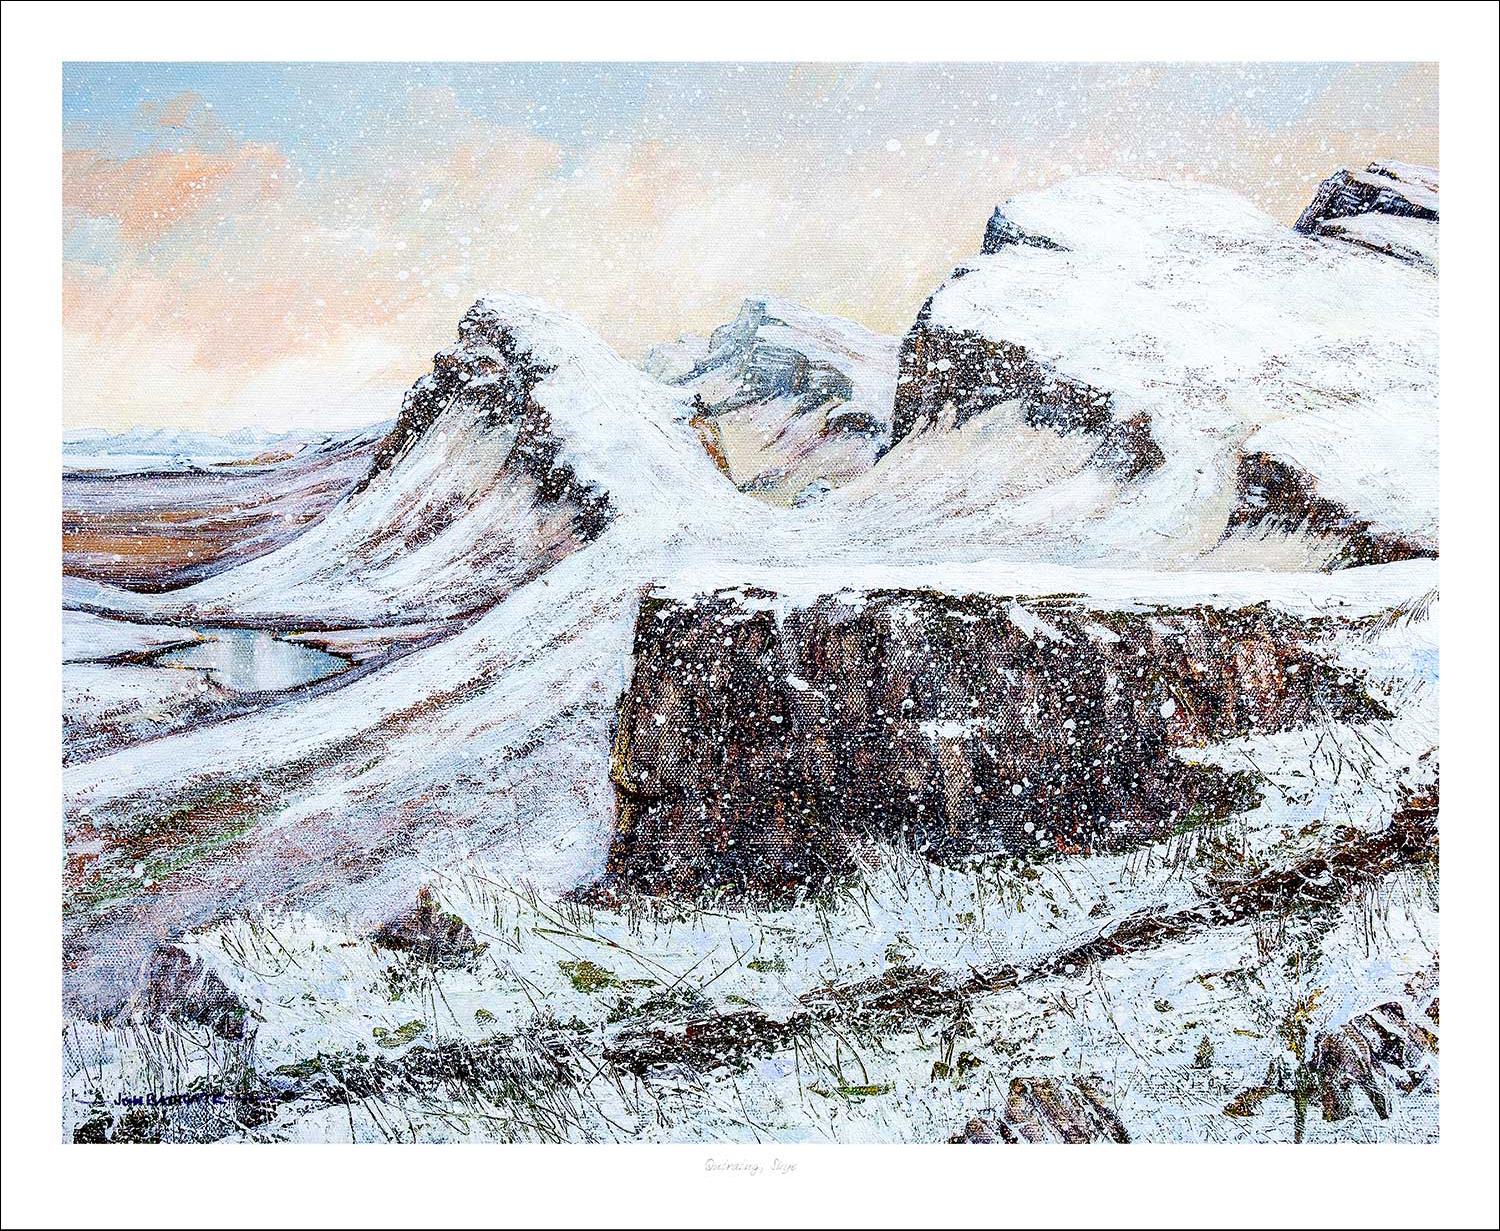 Quiraing, Skye Art Print from an original painting by artist John Bathgate